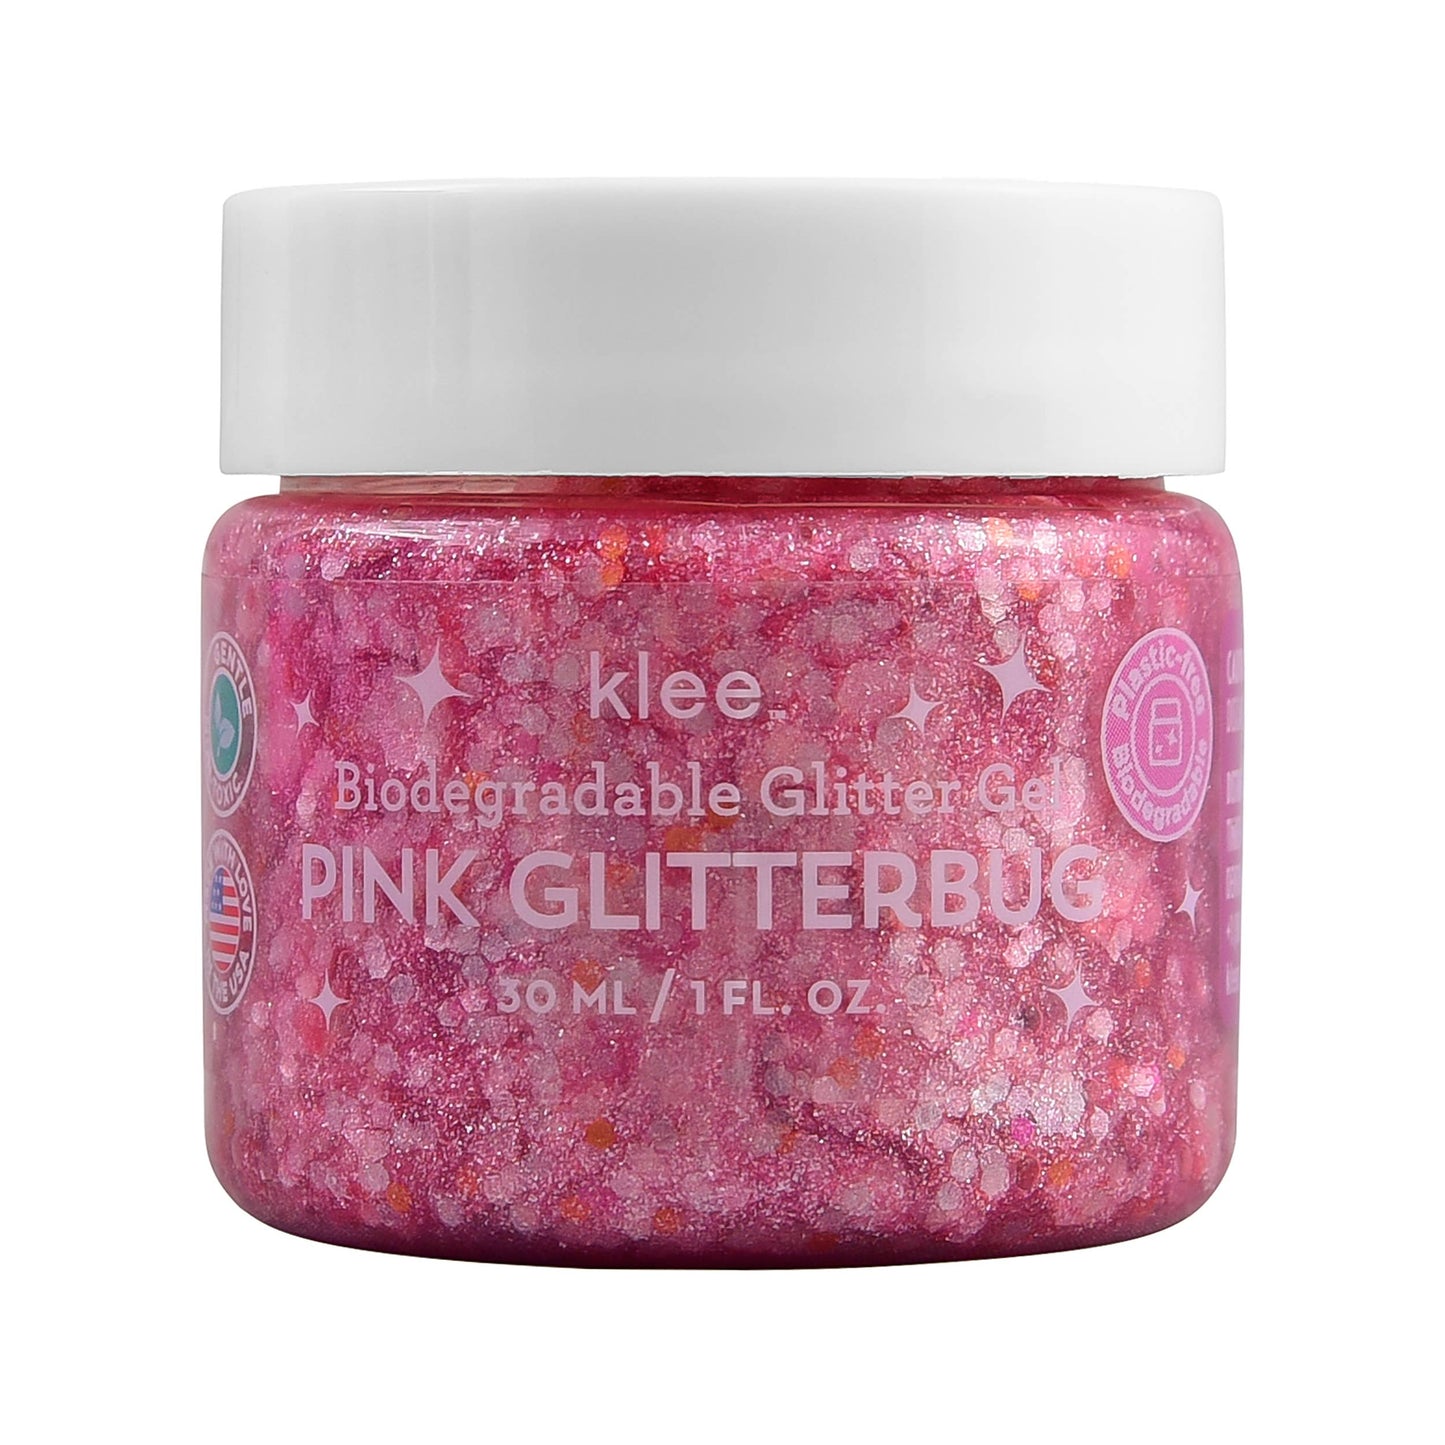 Pink Glitterbug - Klee Biodegradable Glitter Gel, 1 oz